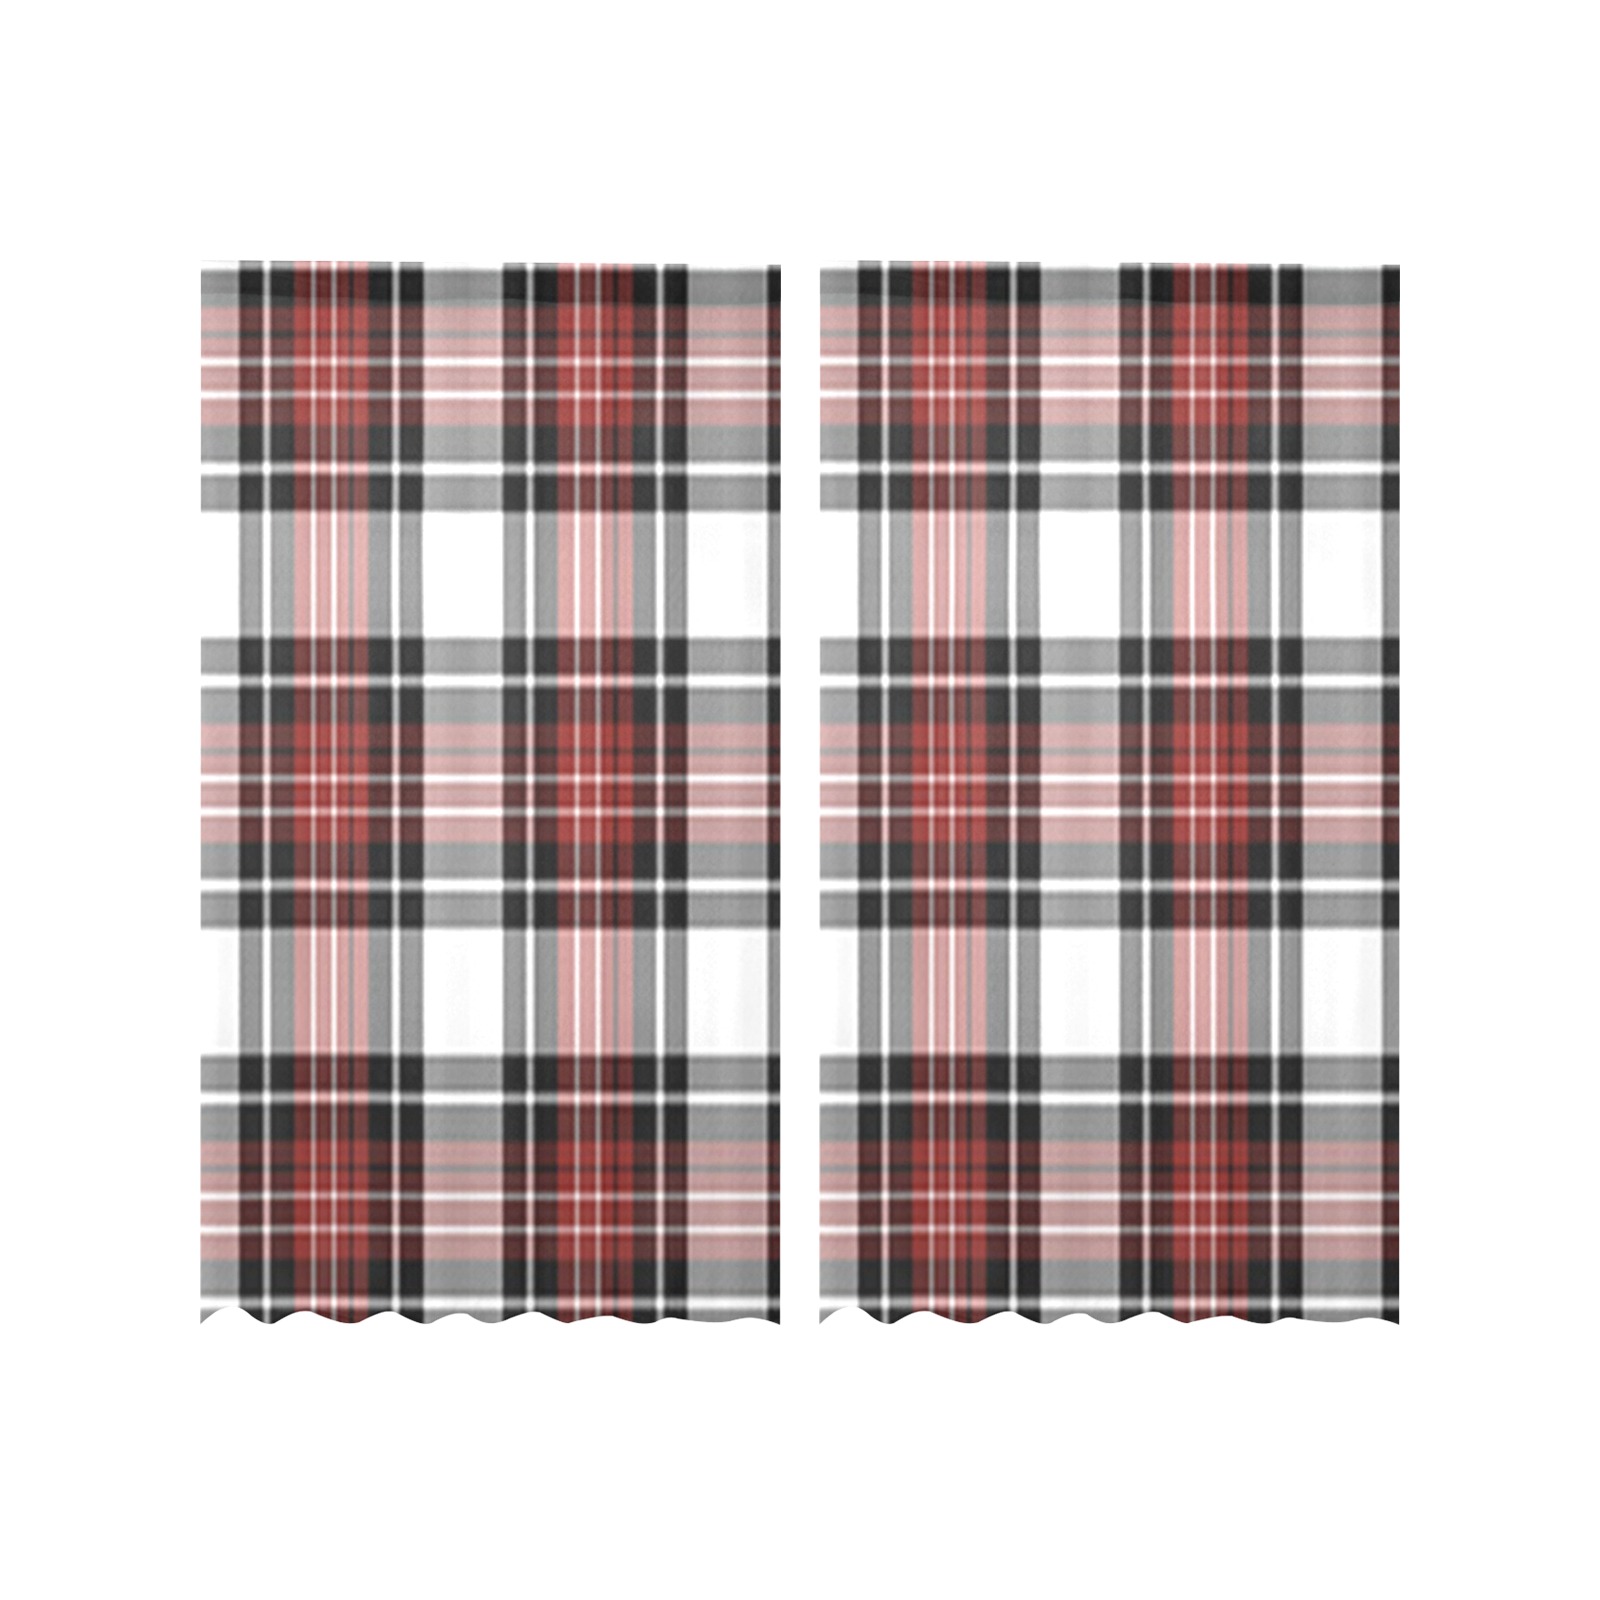 Red Black Plaid Gauze Curtain 28"x63" (Two-Piece)